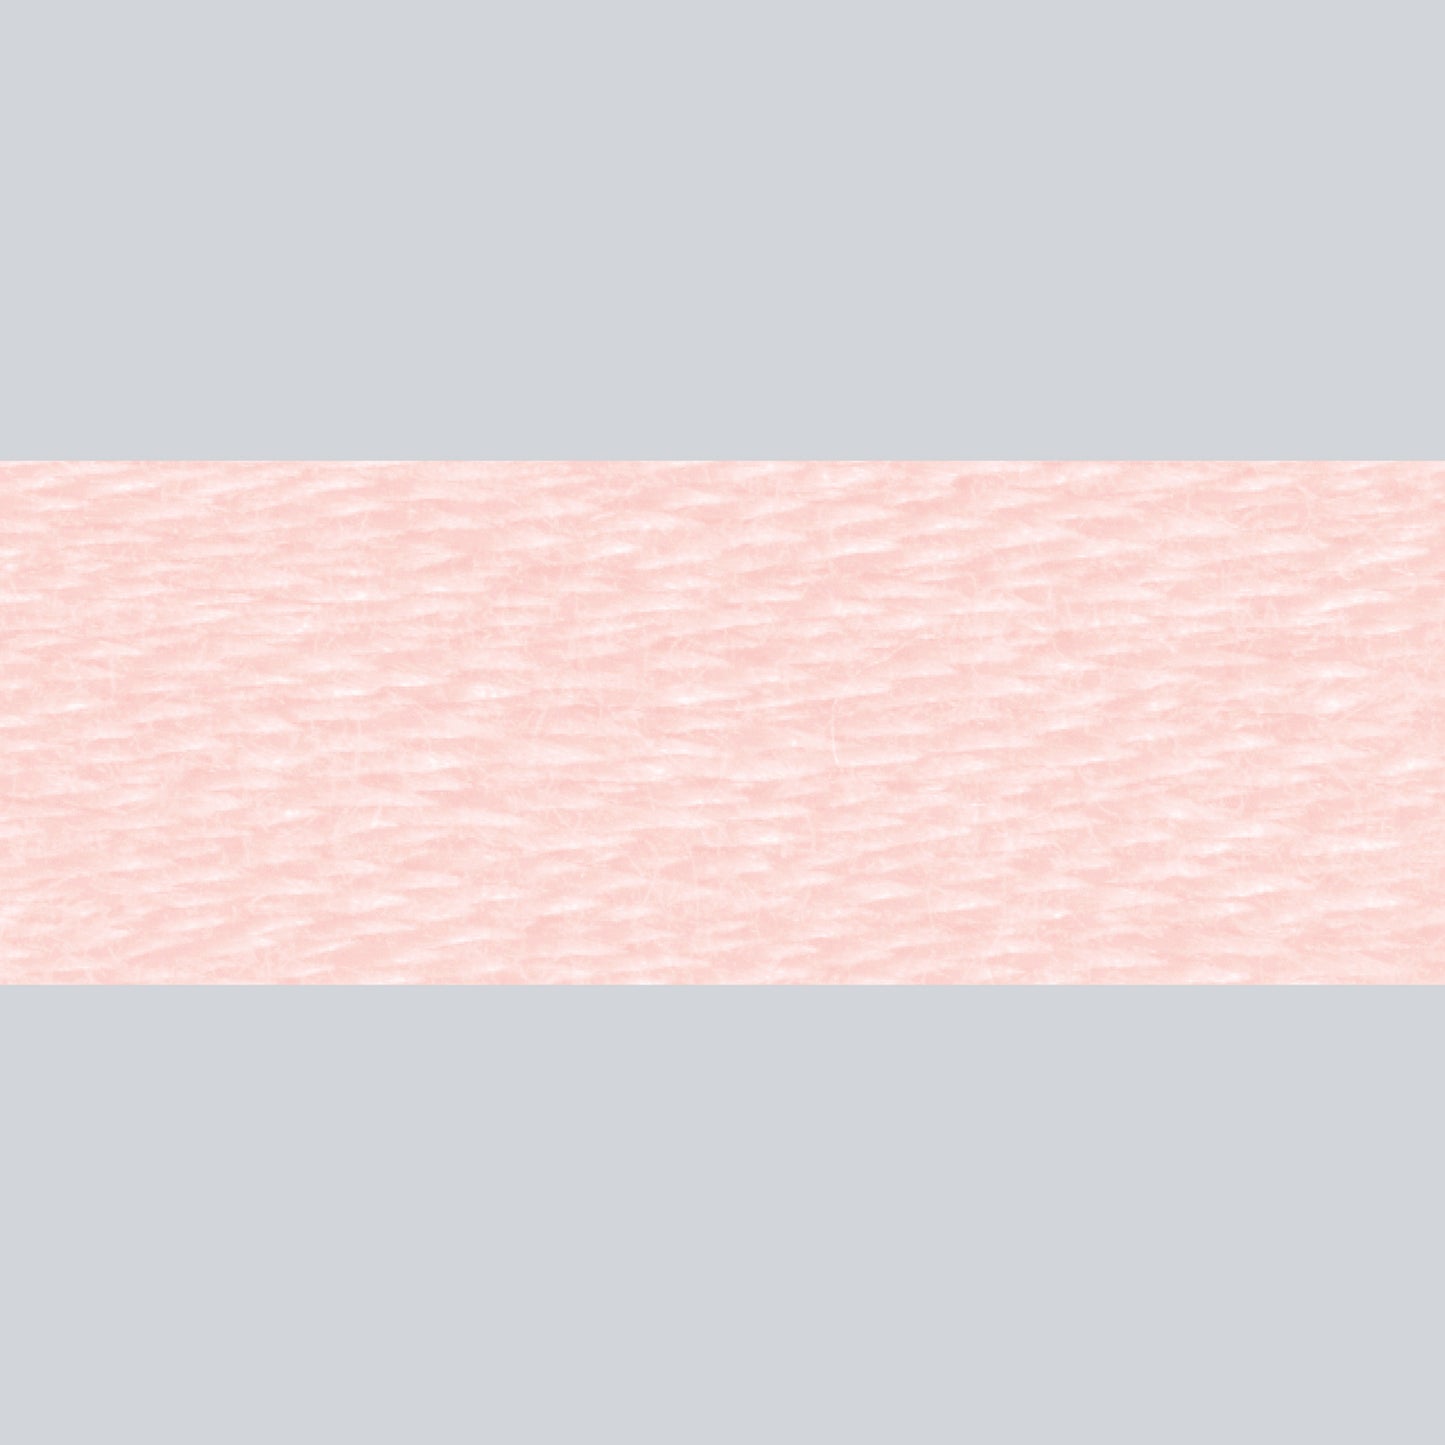 DMC Embroidery Floss - 225 Ultra Very Light Shell Pink Alternative View #1